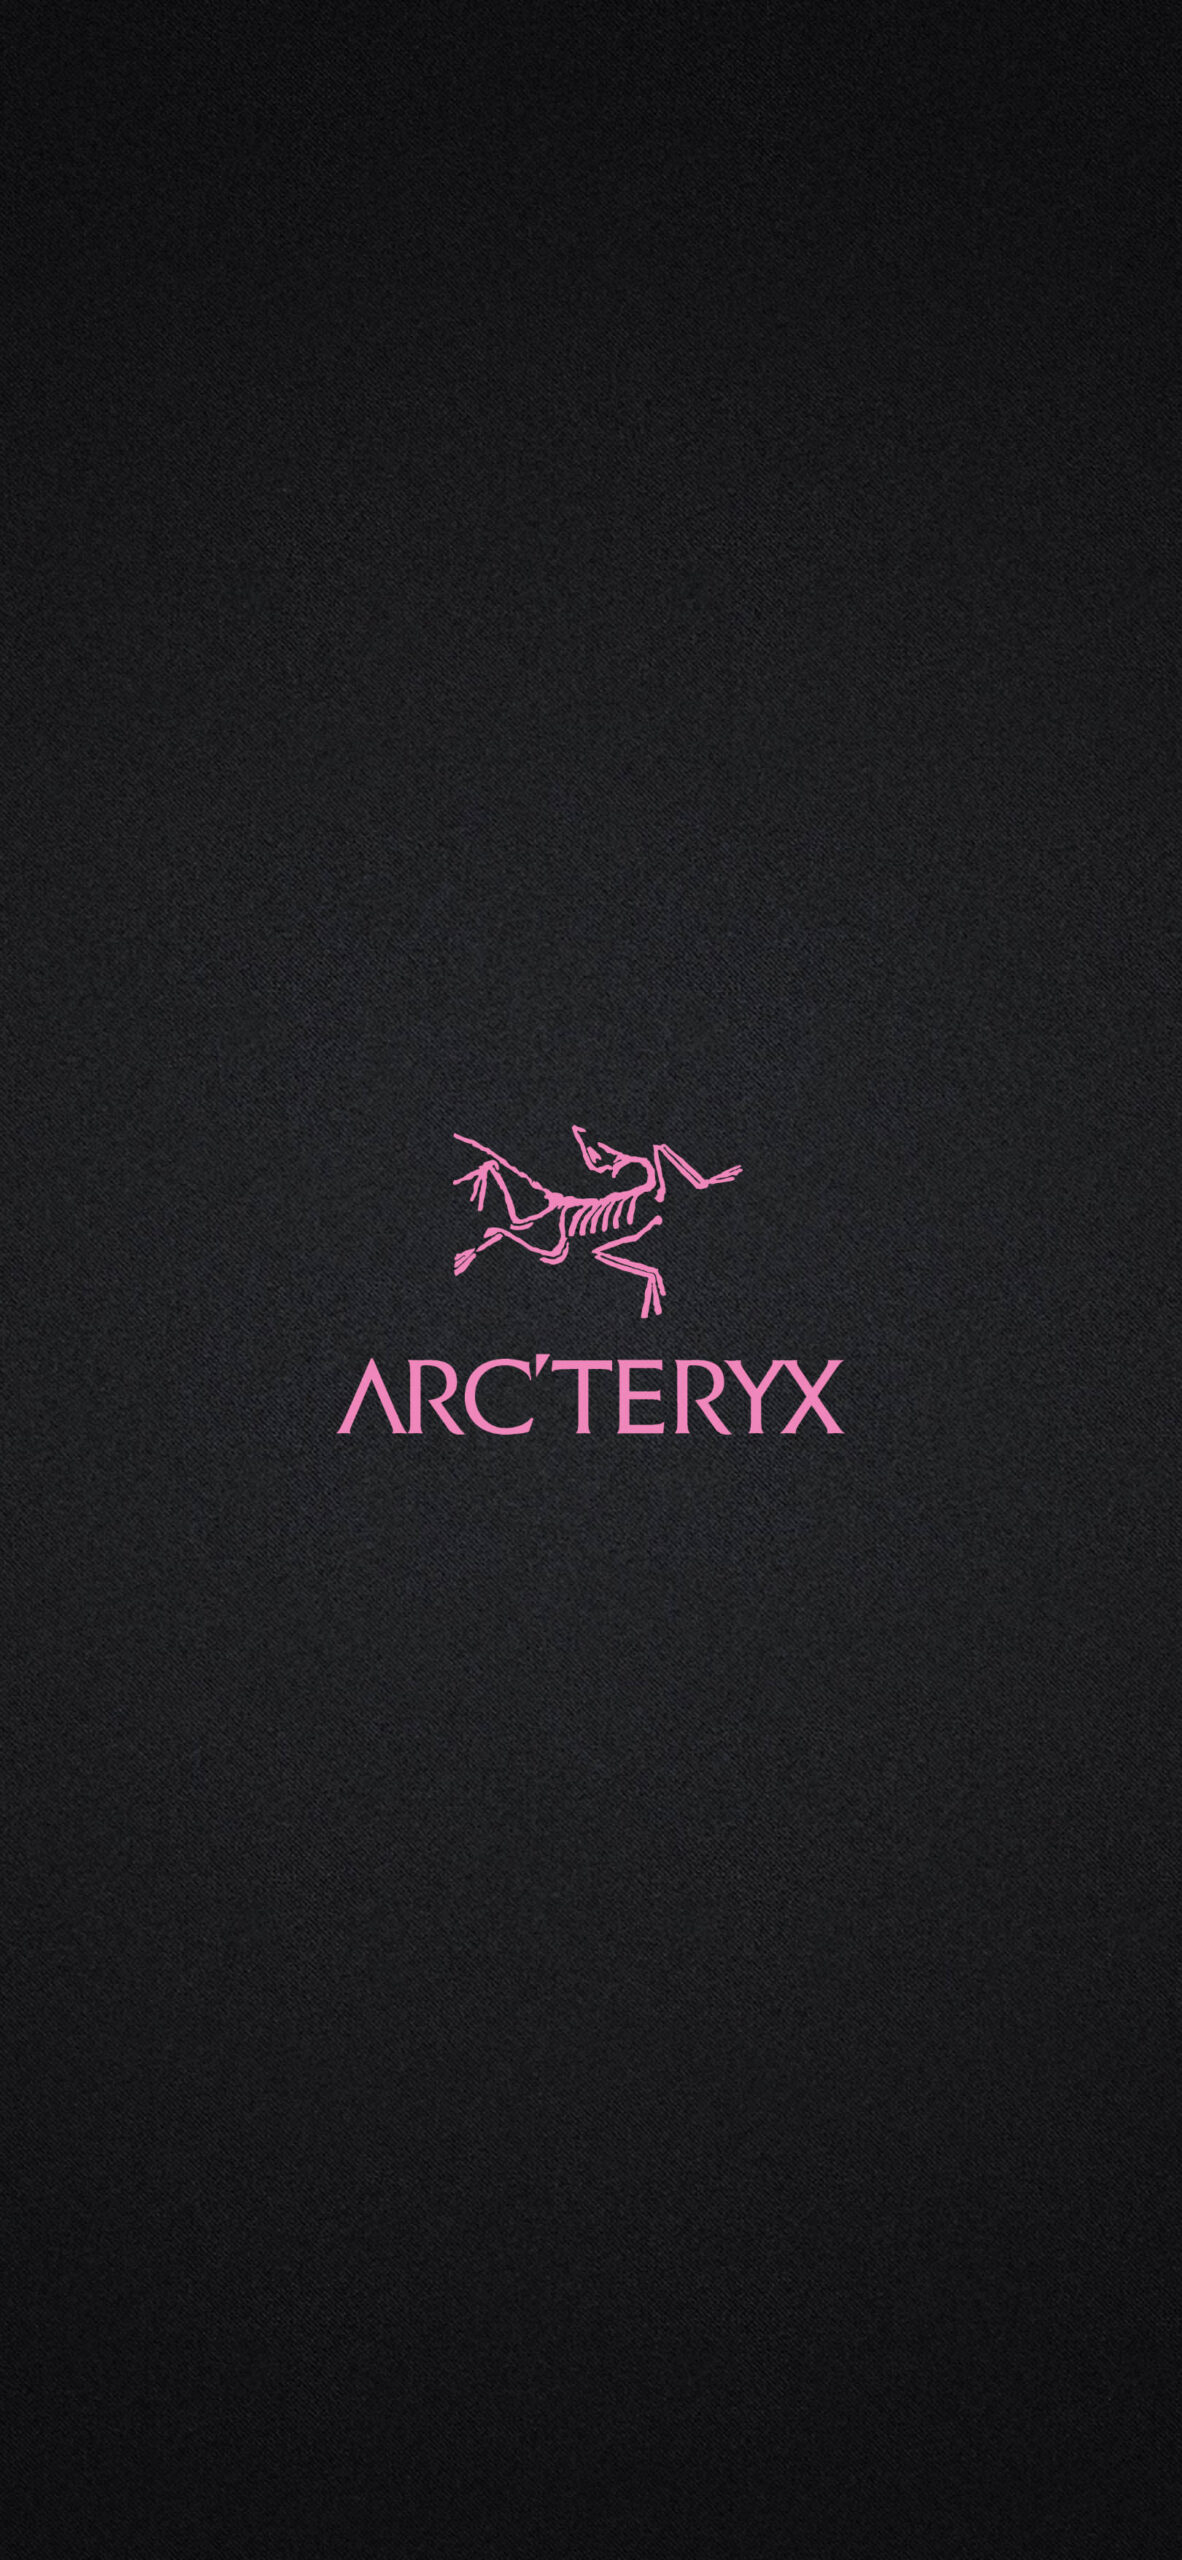 Arc Teryx アークテリクスの無料高画質スマホ壁紙50枚 エモい スマホ壁紙辞典